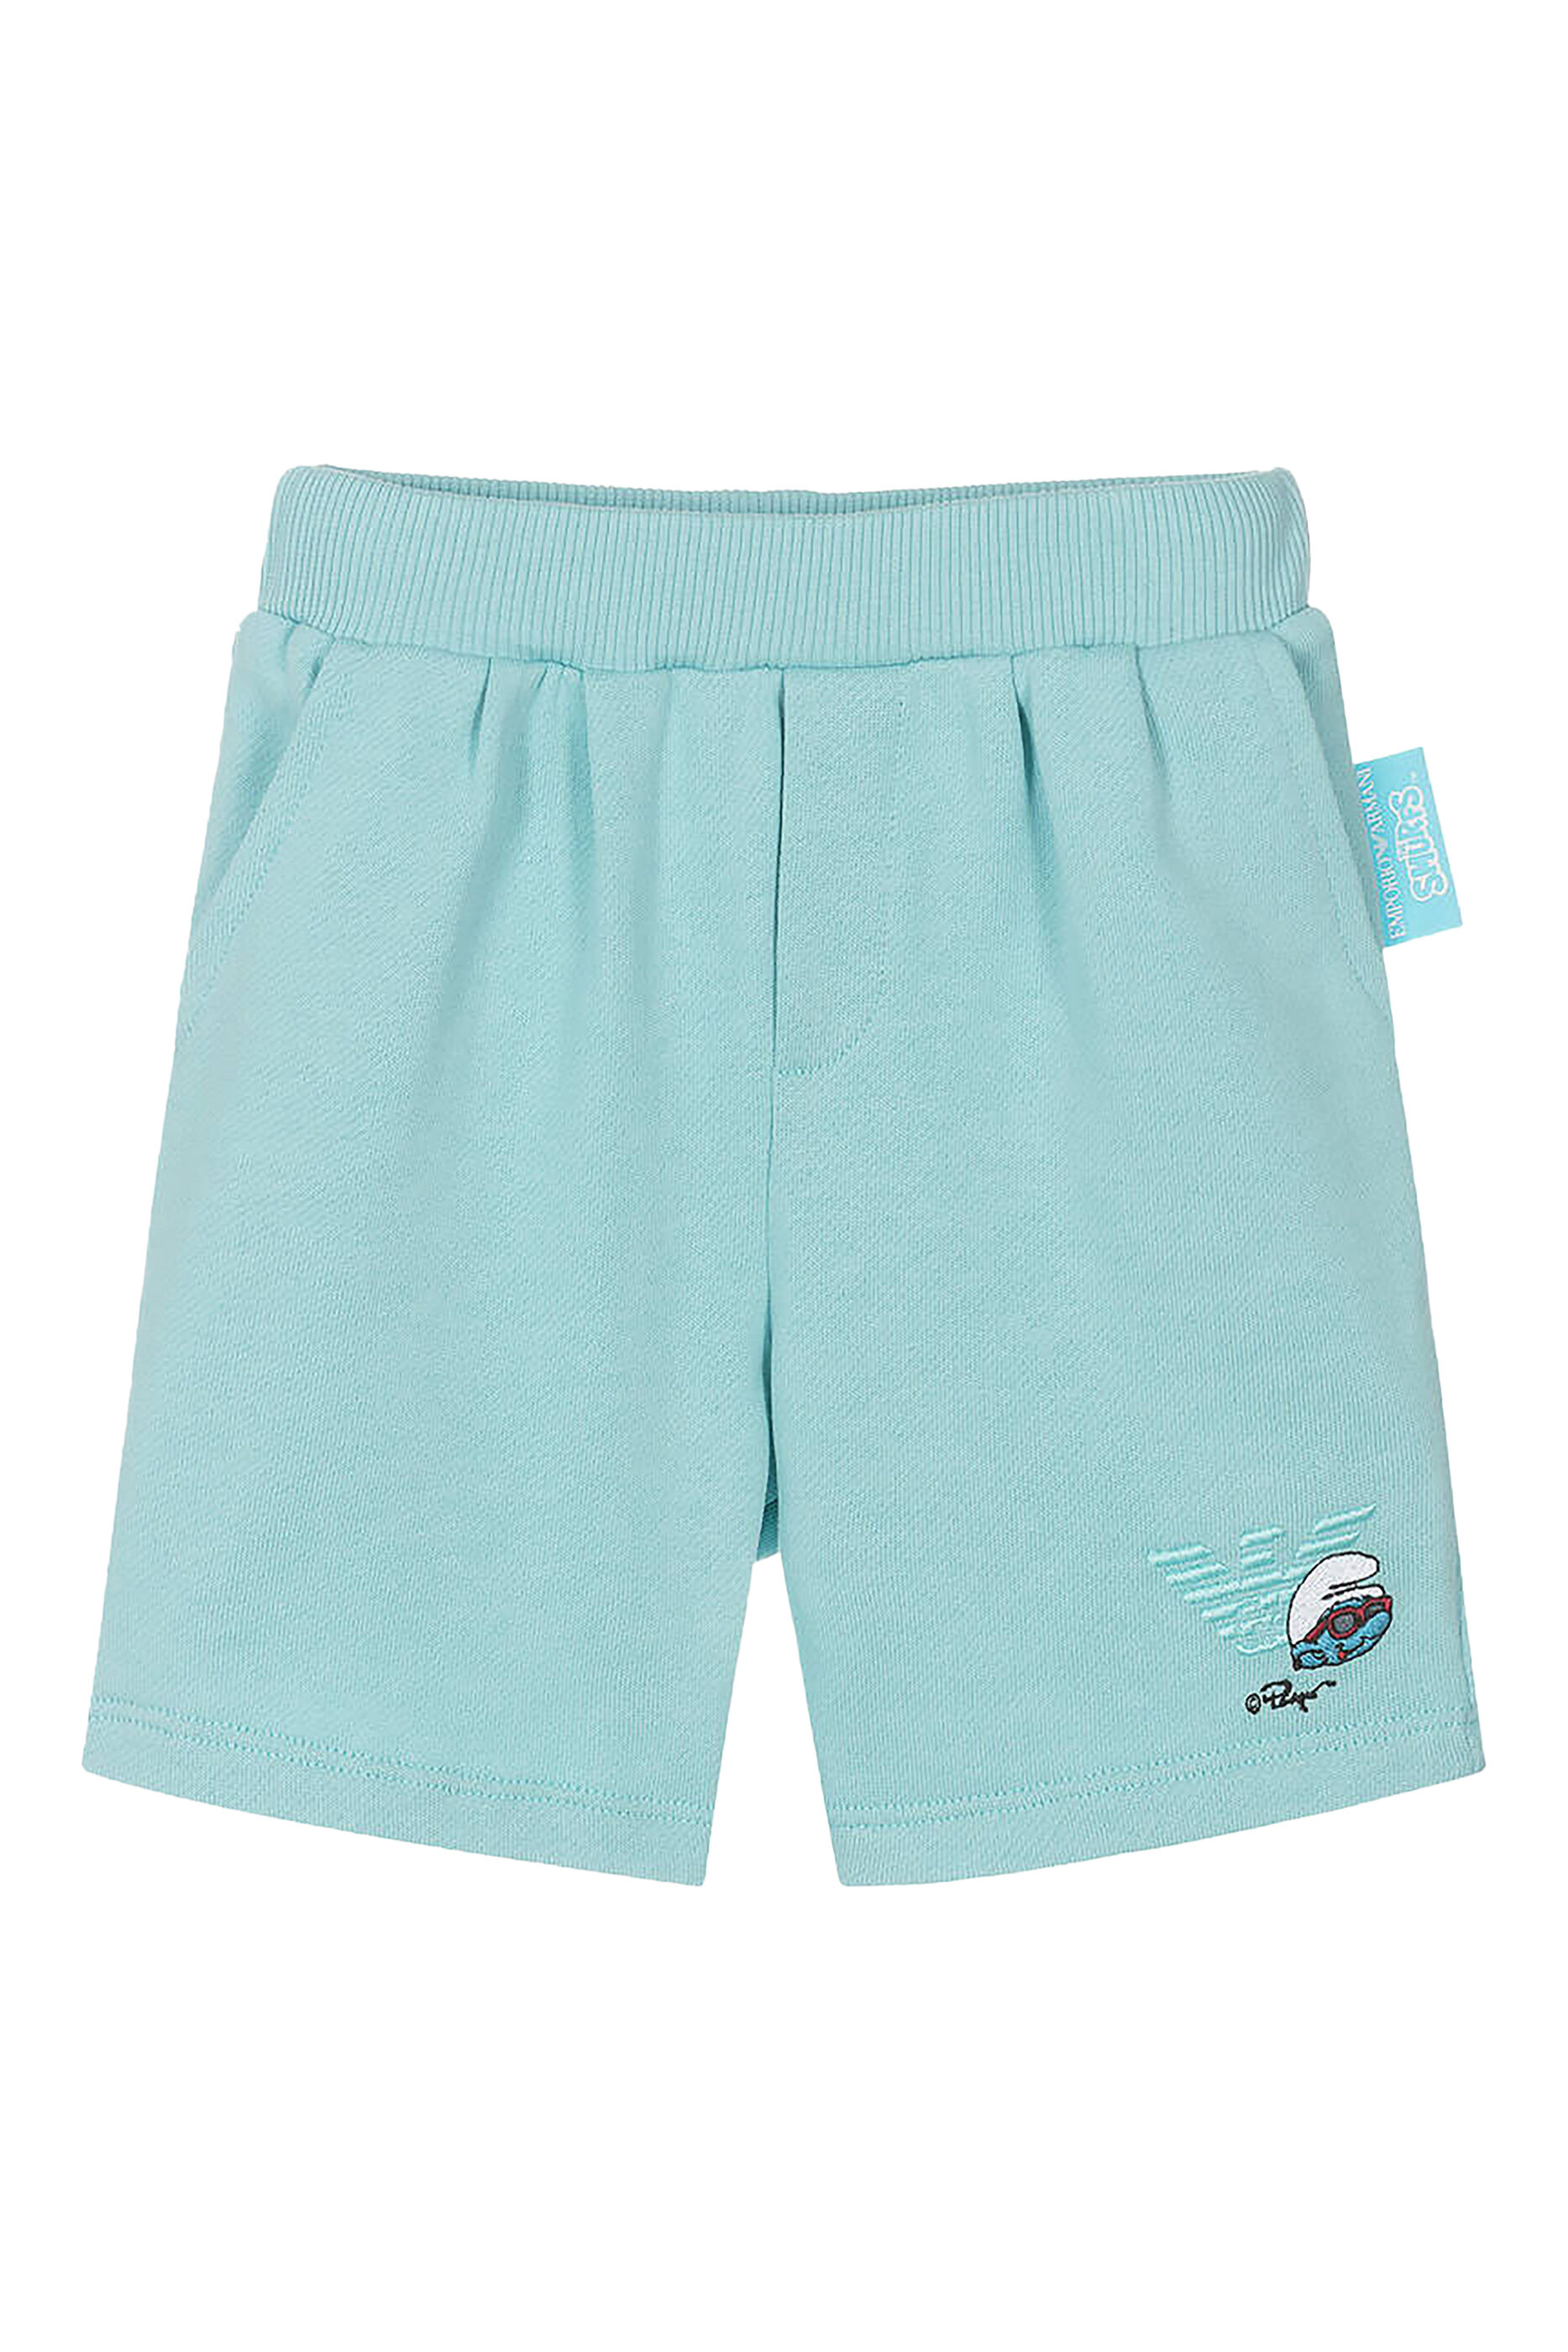 Emporio Armani Kids logo-waist Bermuda shorts - Blue